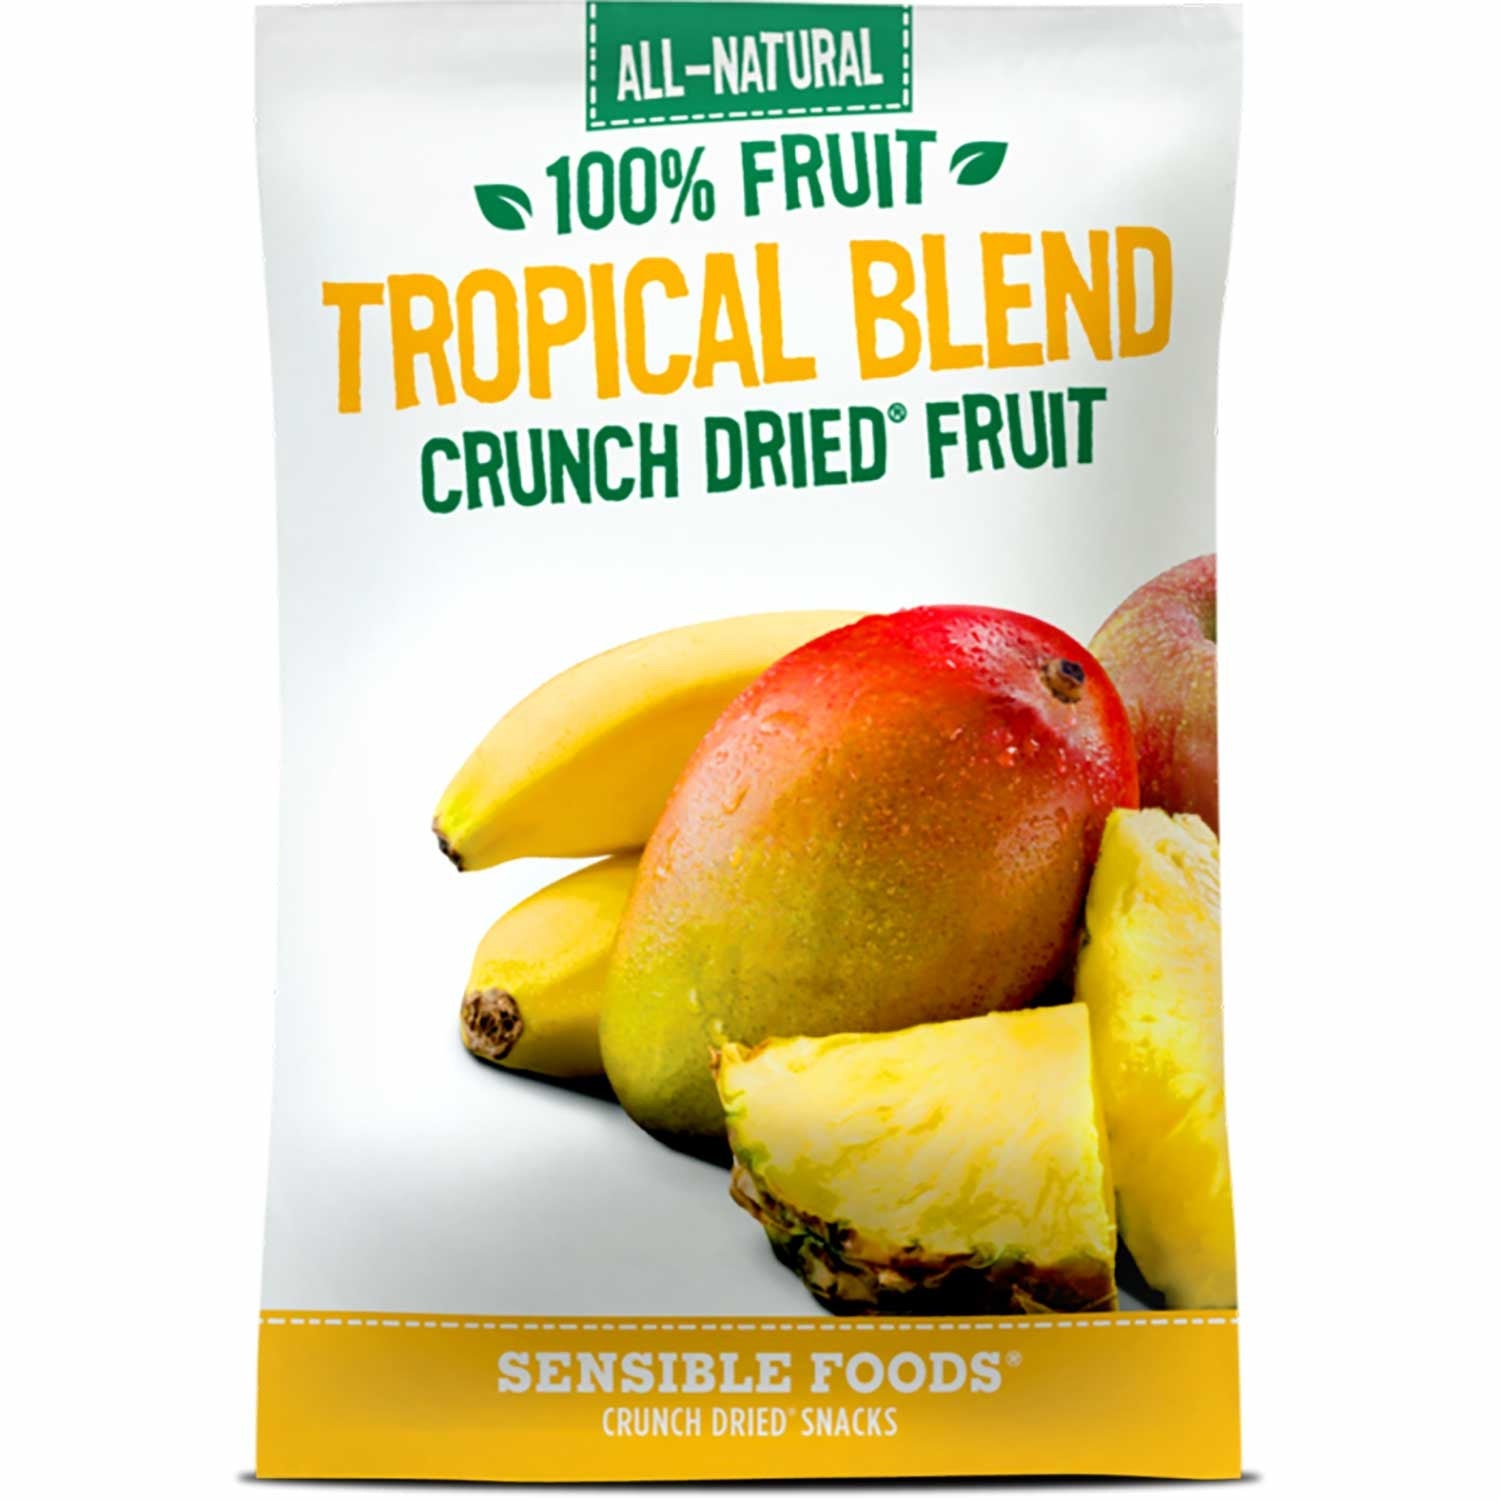 Sensible Foods All-Natural 100% Fruit Tropical Blend Crunch Dried Fruit, 37g.-NaturesWisdom